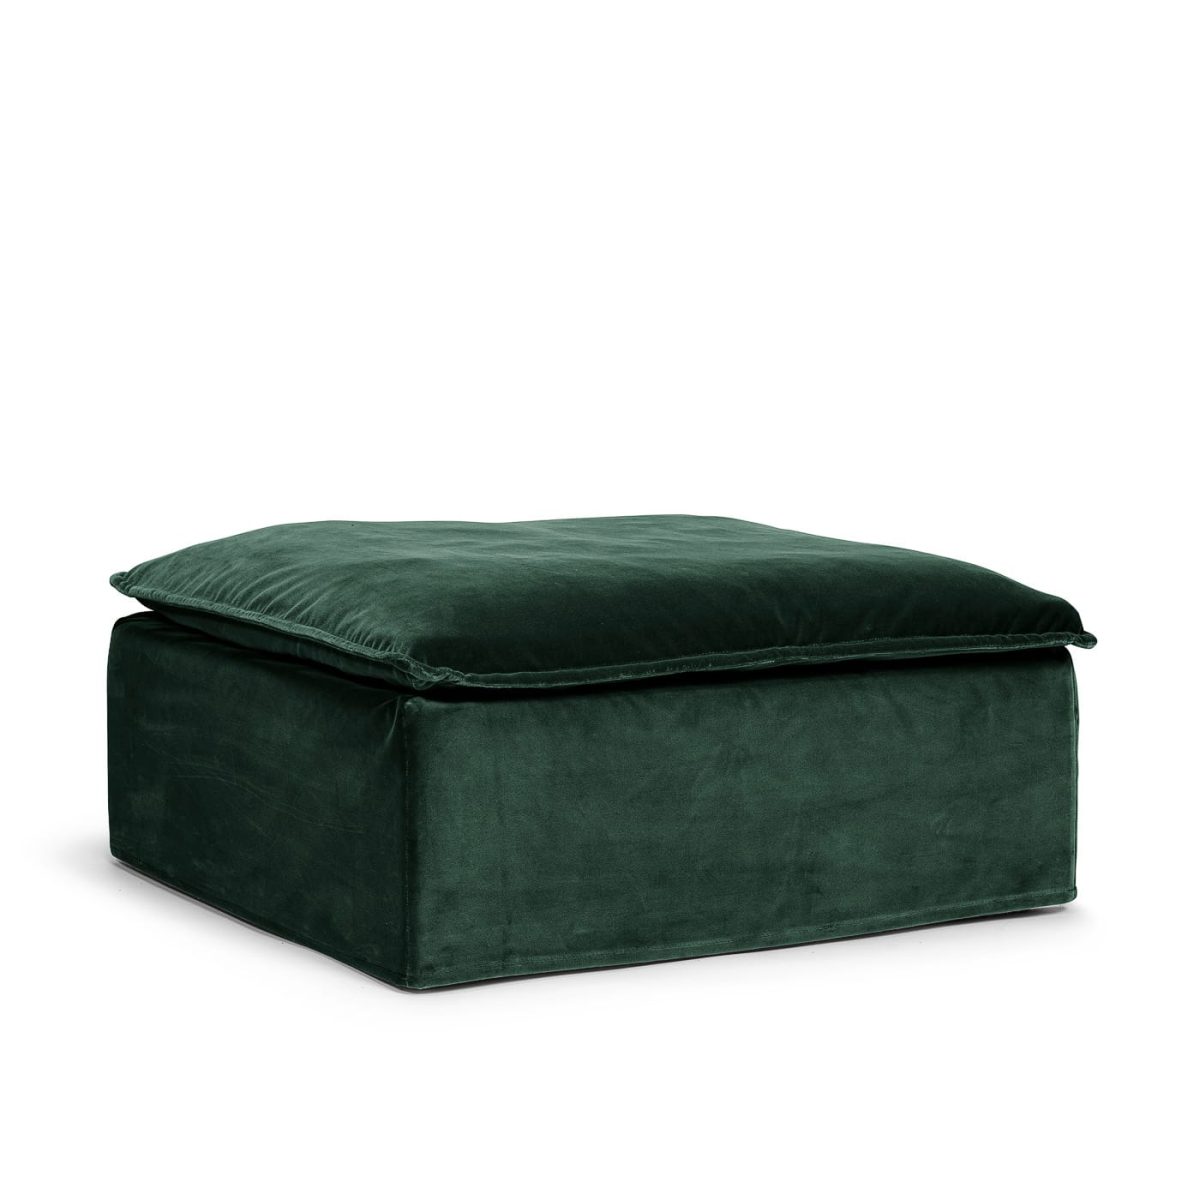 Luca Original 2-seater sofa Emerald Green